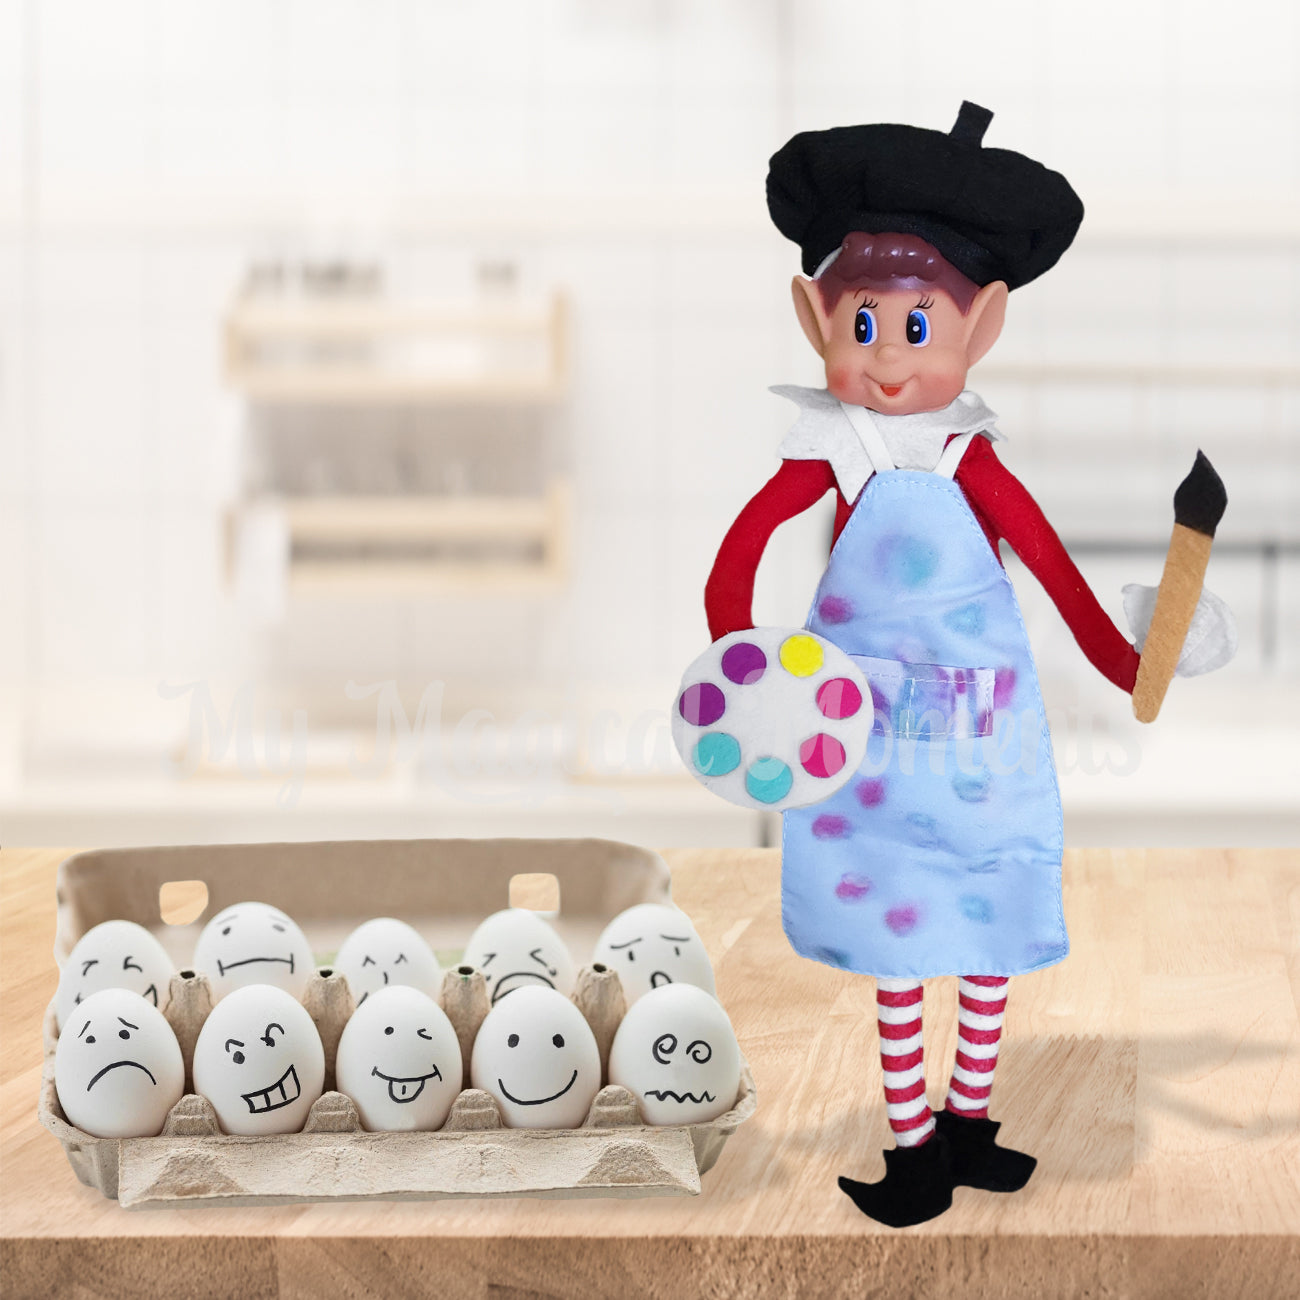 Elf painting eggs prank in artist costume